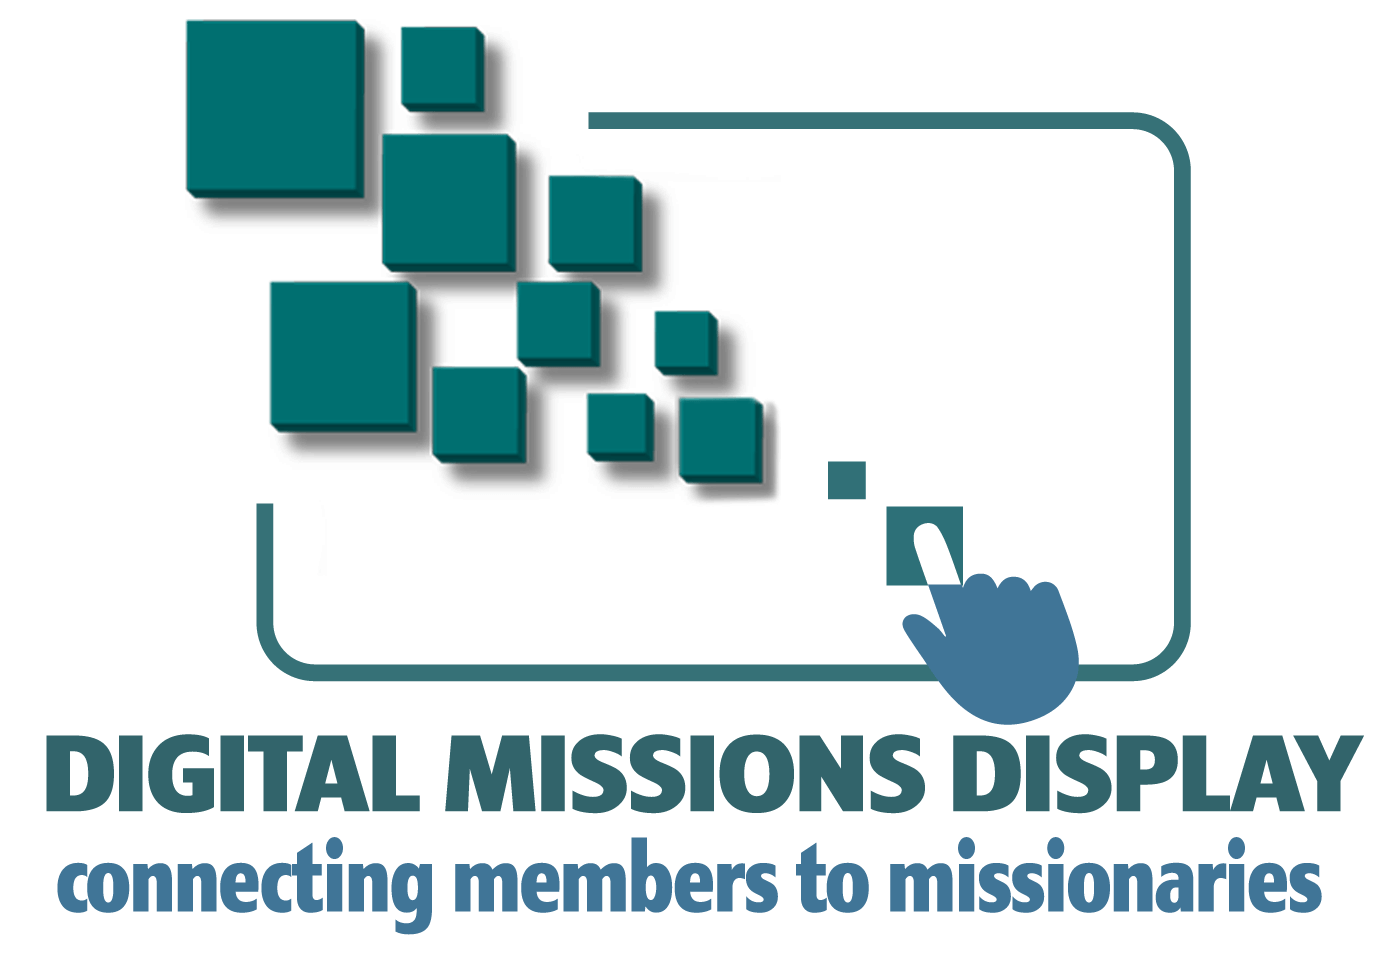 mission display logo image